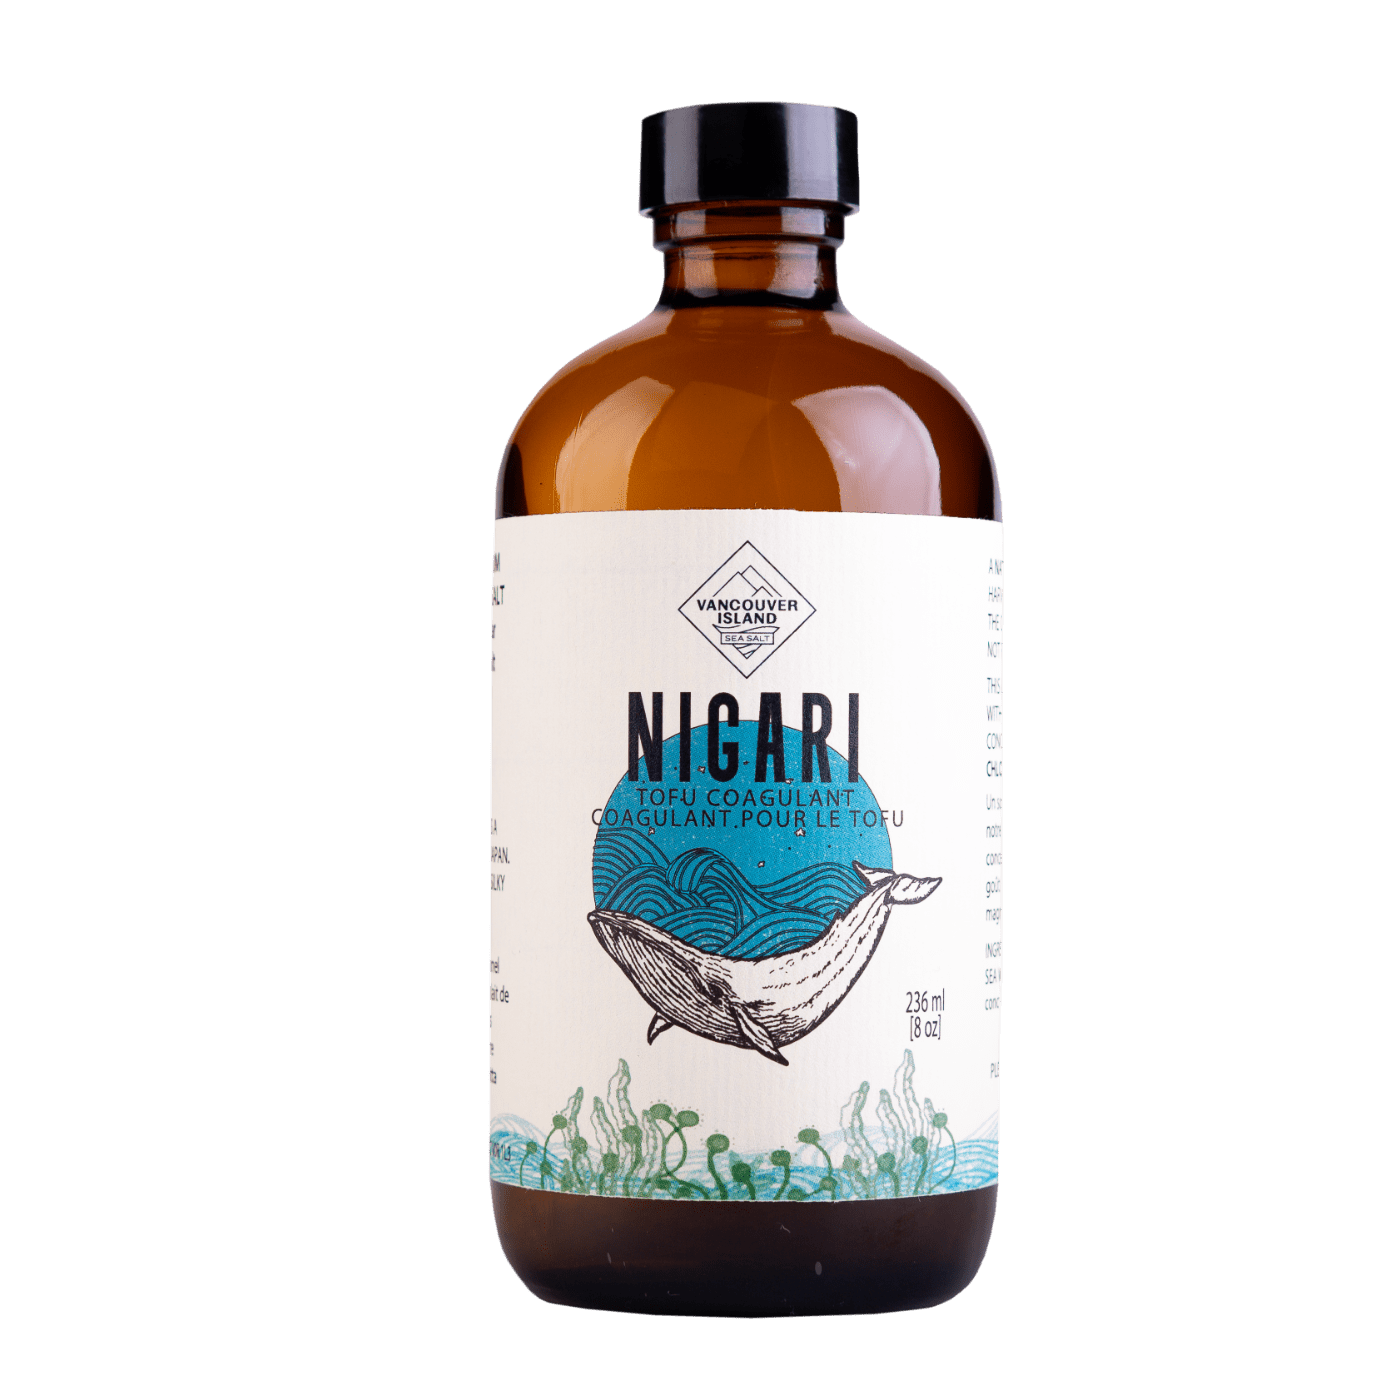 Nigari (Bouteille de 236 ml)